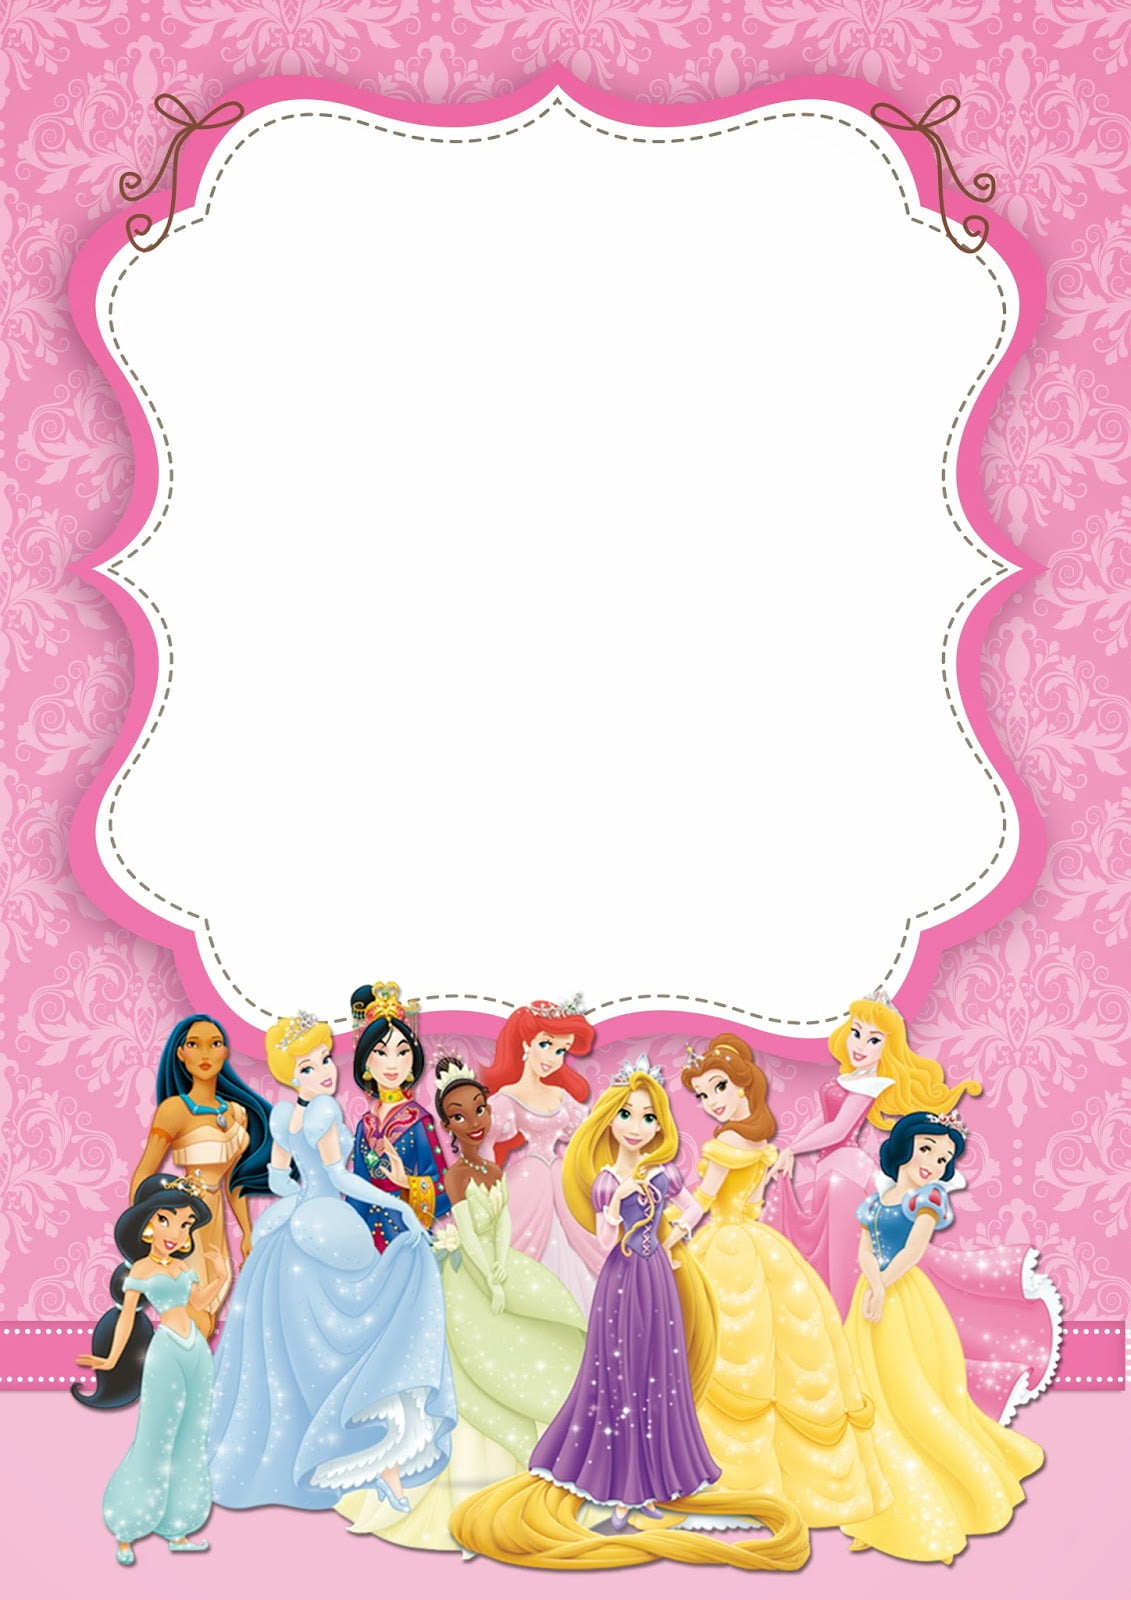 FREE Printable Disney Princess Ticket Invitation Template | | FREE ...